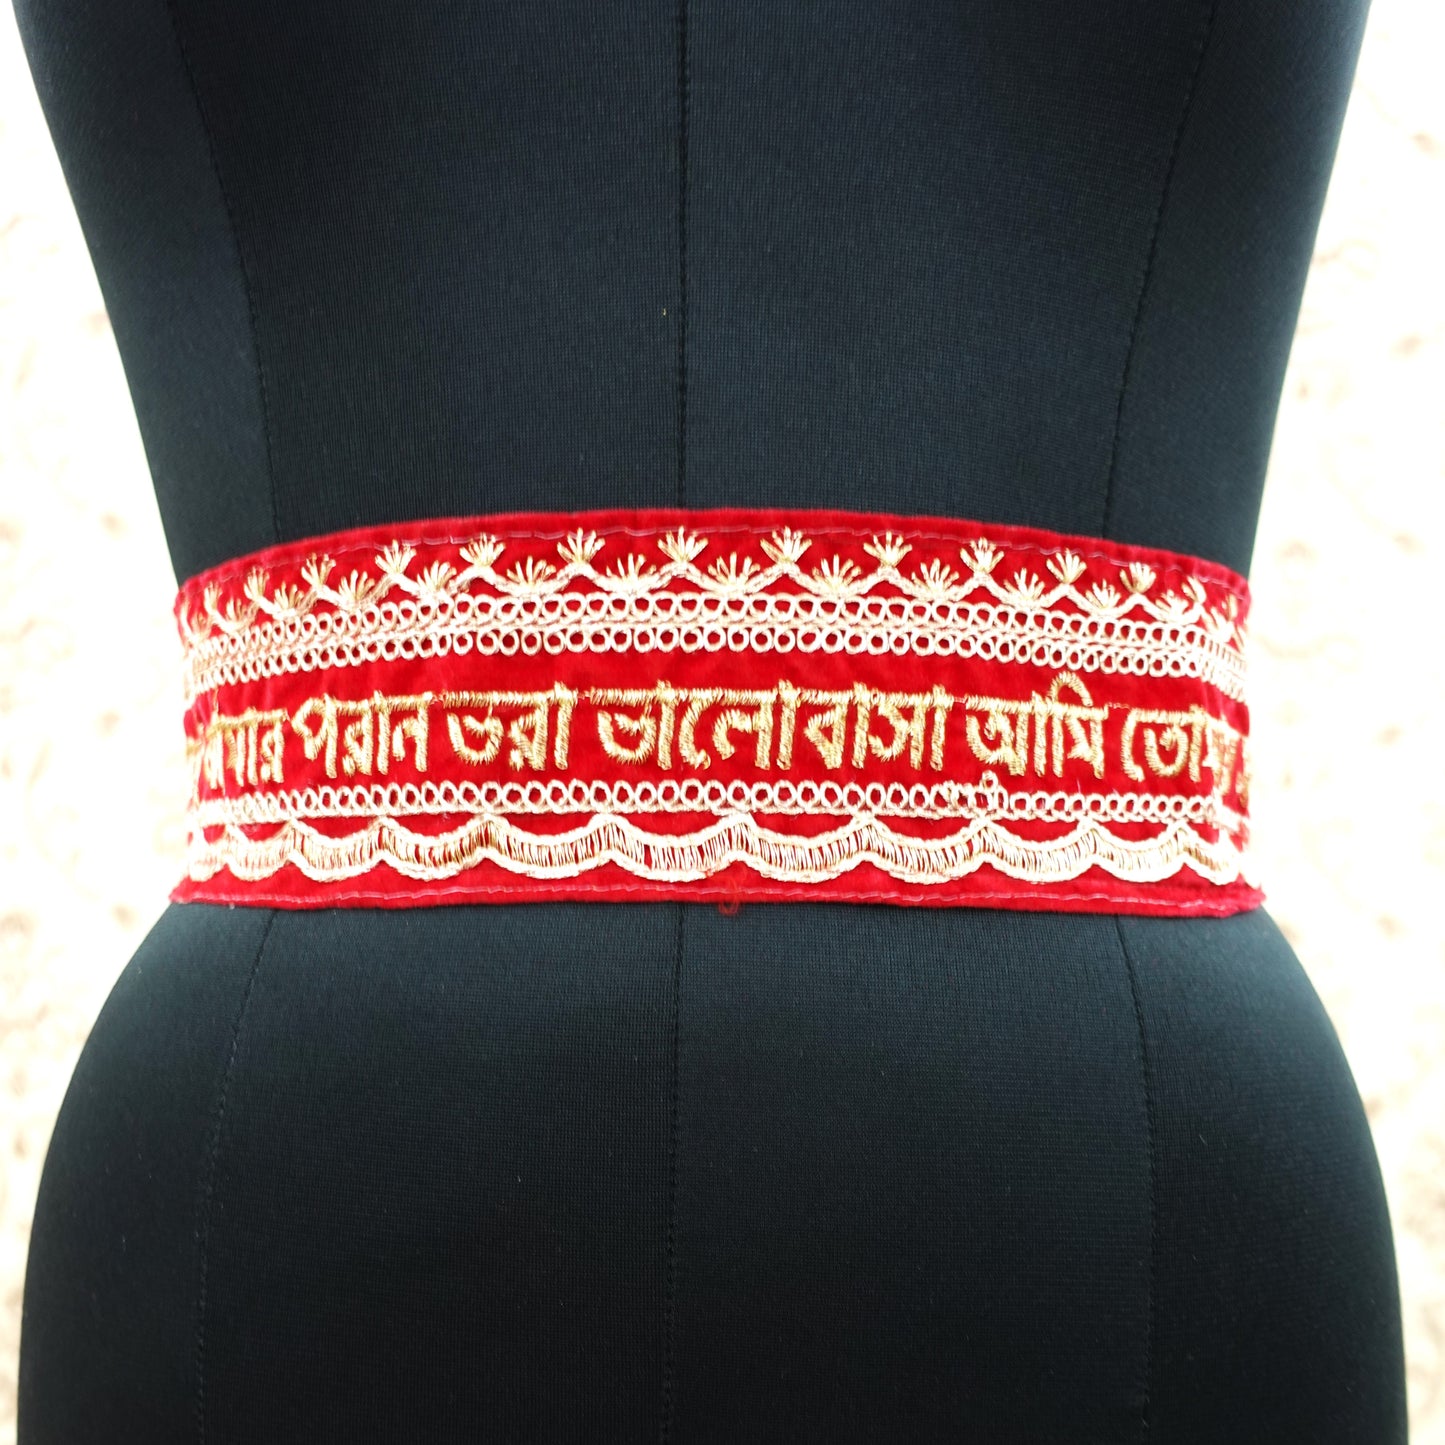 Bengali Scripted Traditional Golden Embroidered Waist Hip Belt Kamarband - Red (Samarpan)